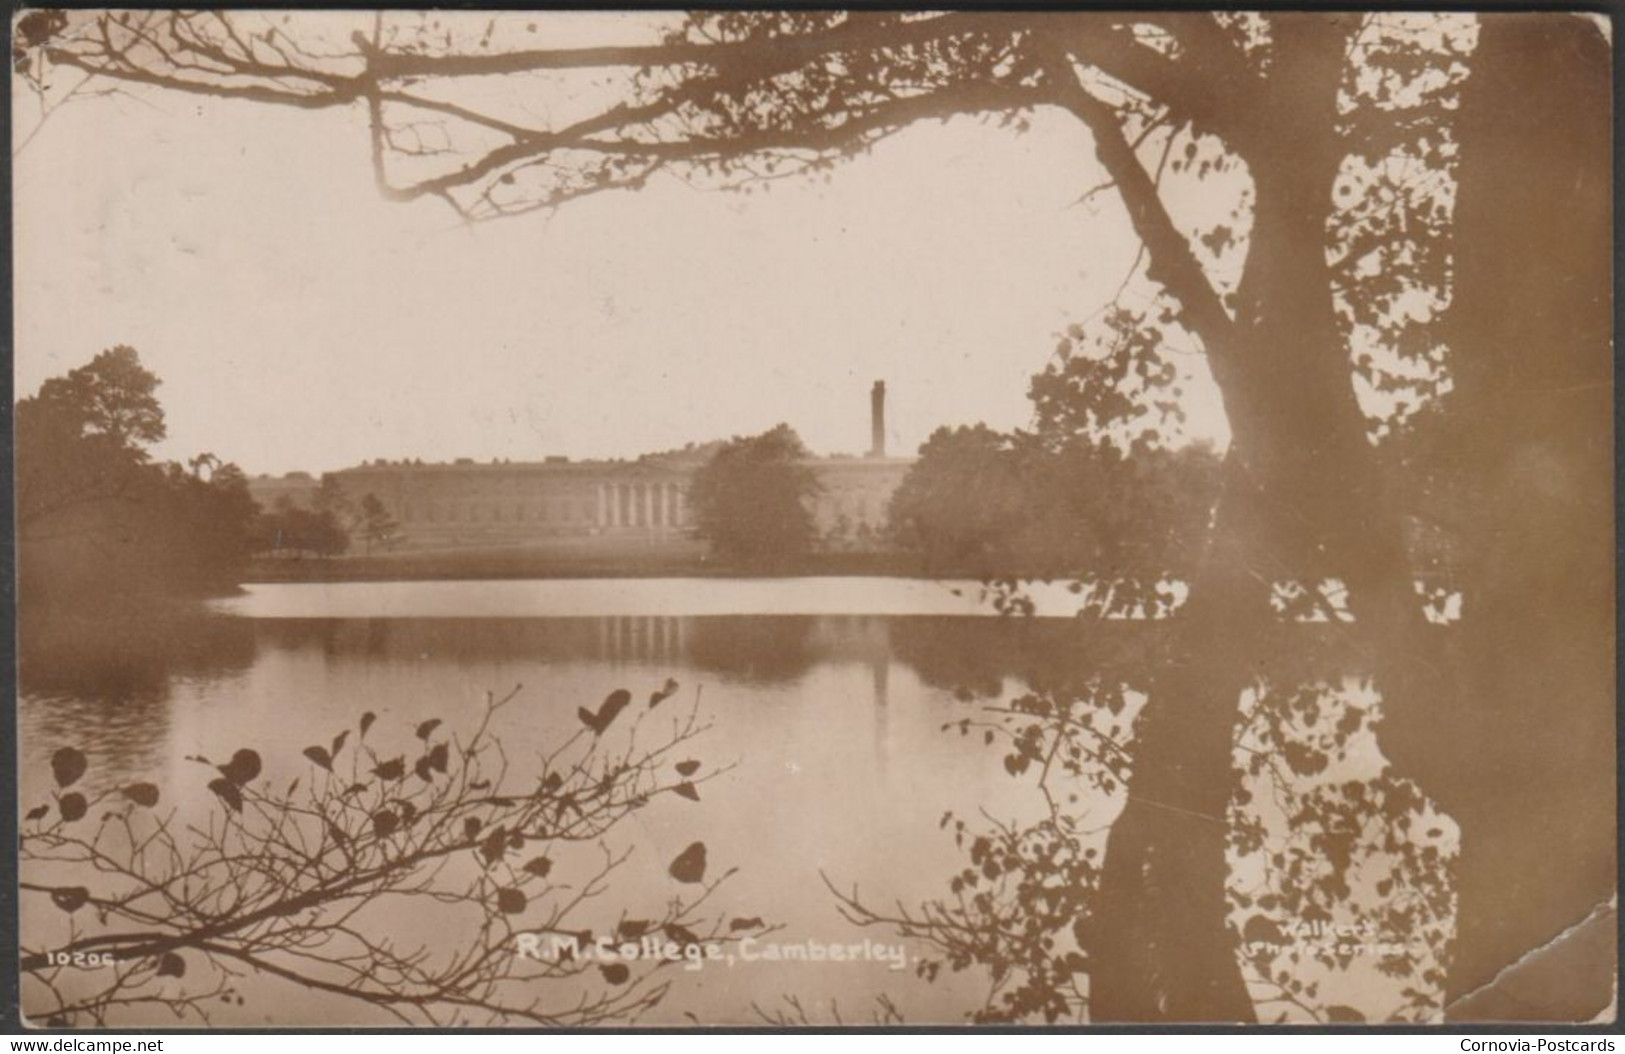 R M College, Camberley, Surrey, 1917 - RP Postcard - Surrey